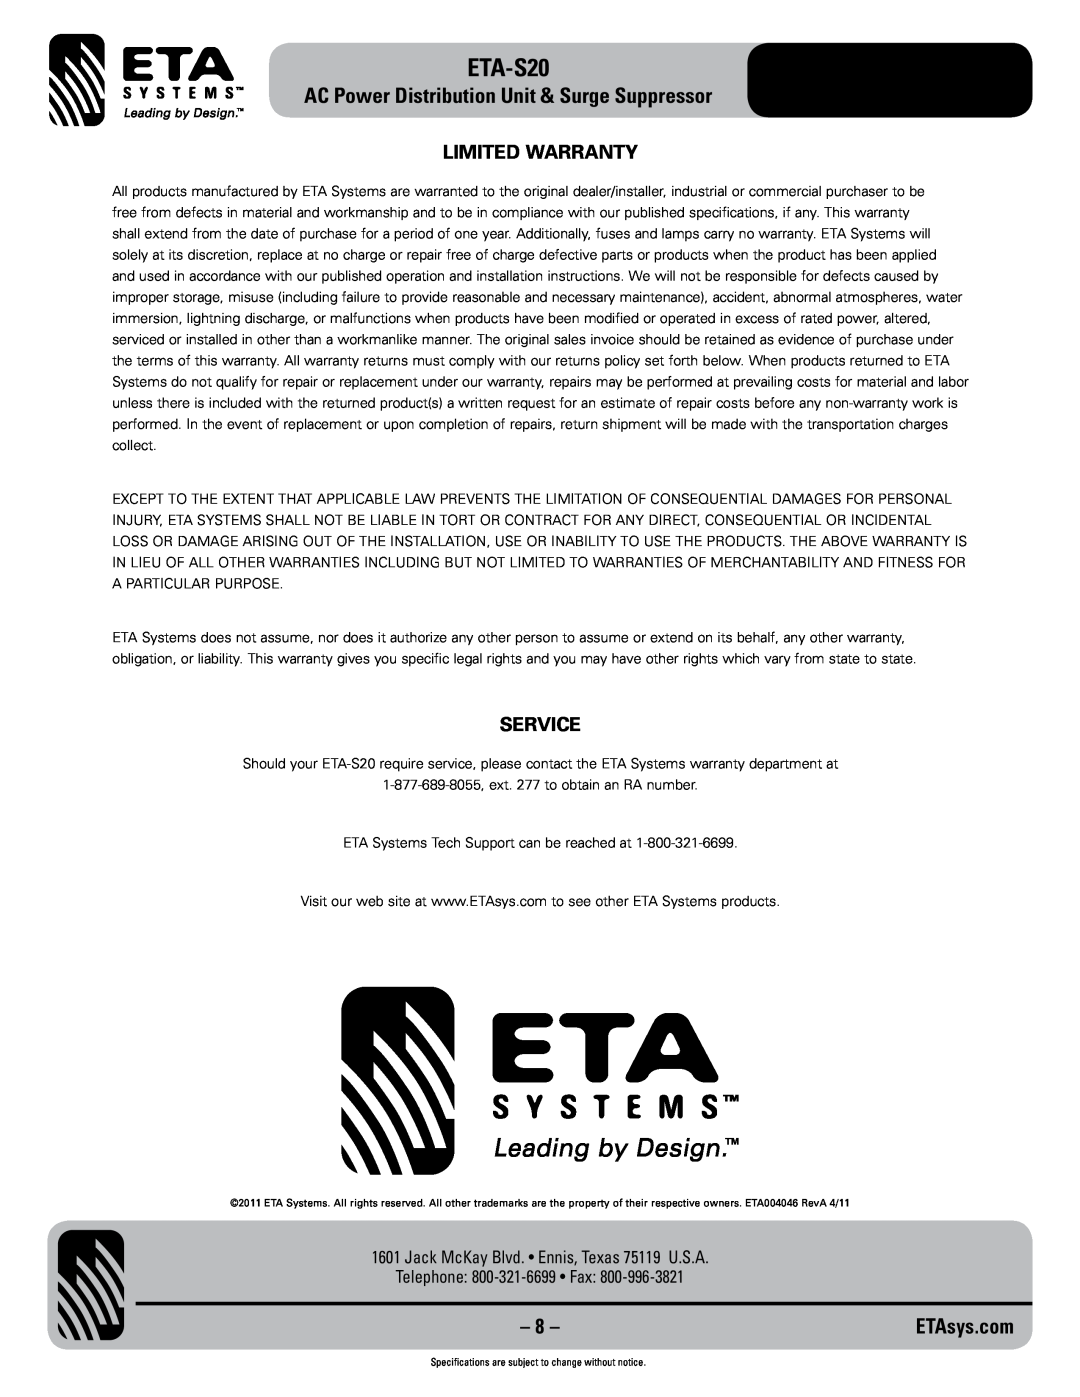 ETA Systems ETA-S20 Limited Warranty, Service, AC Power Distribution Unit & Surge Suppressor, Telephone 800-321-6699 Fax 